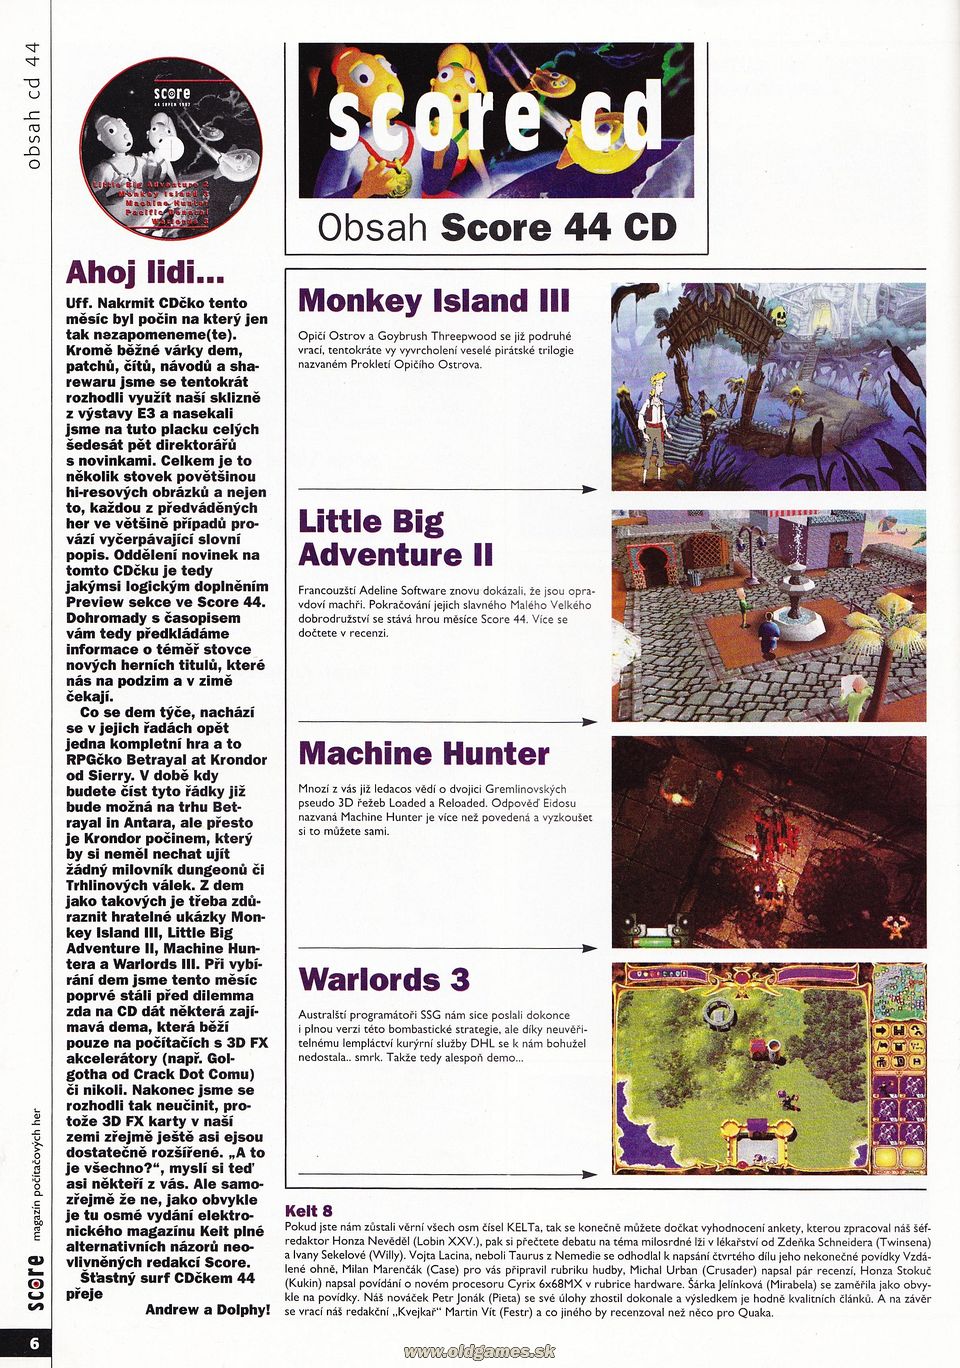 Obsah Score 44 CD